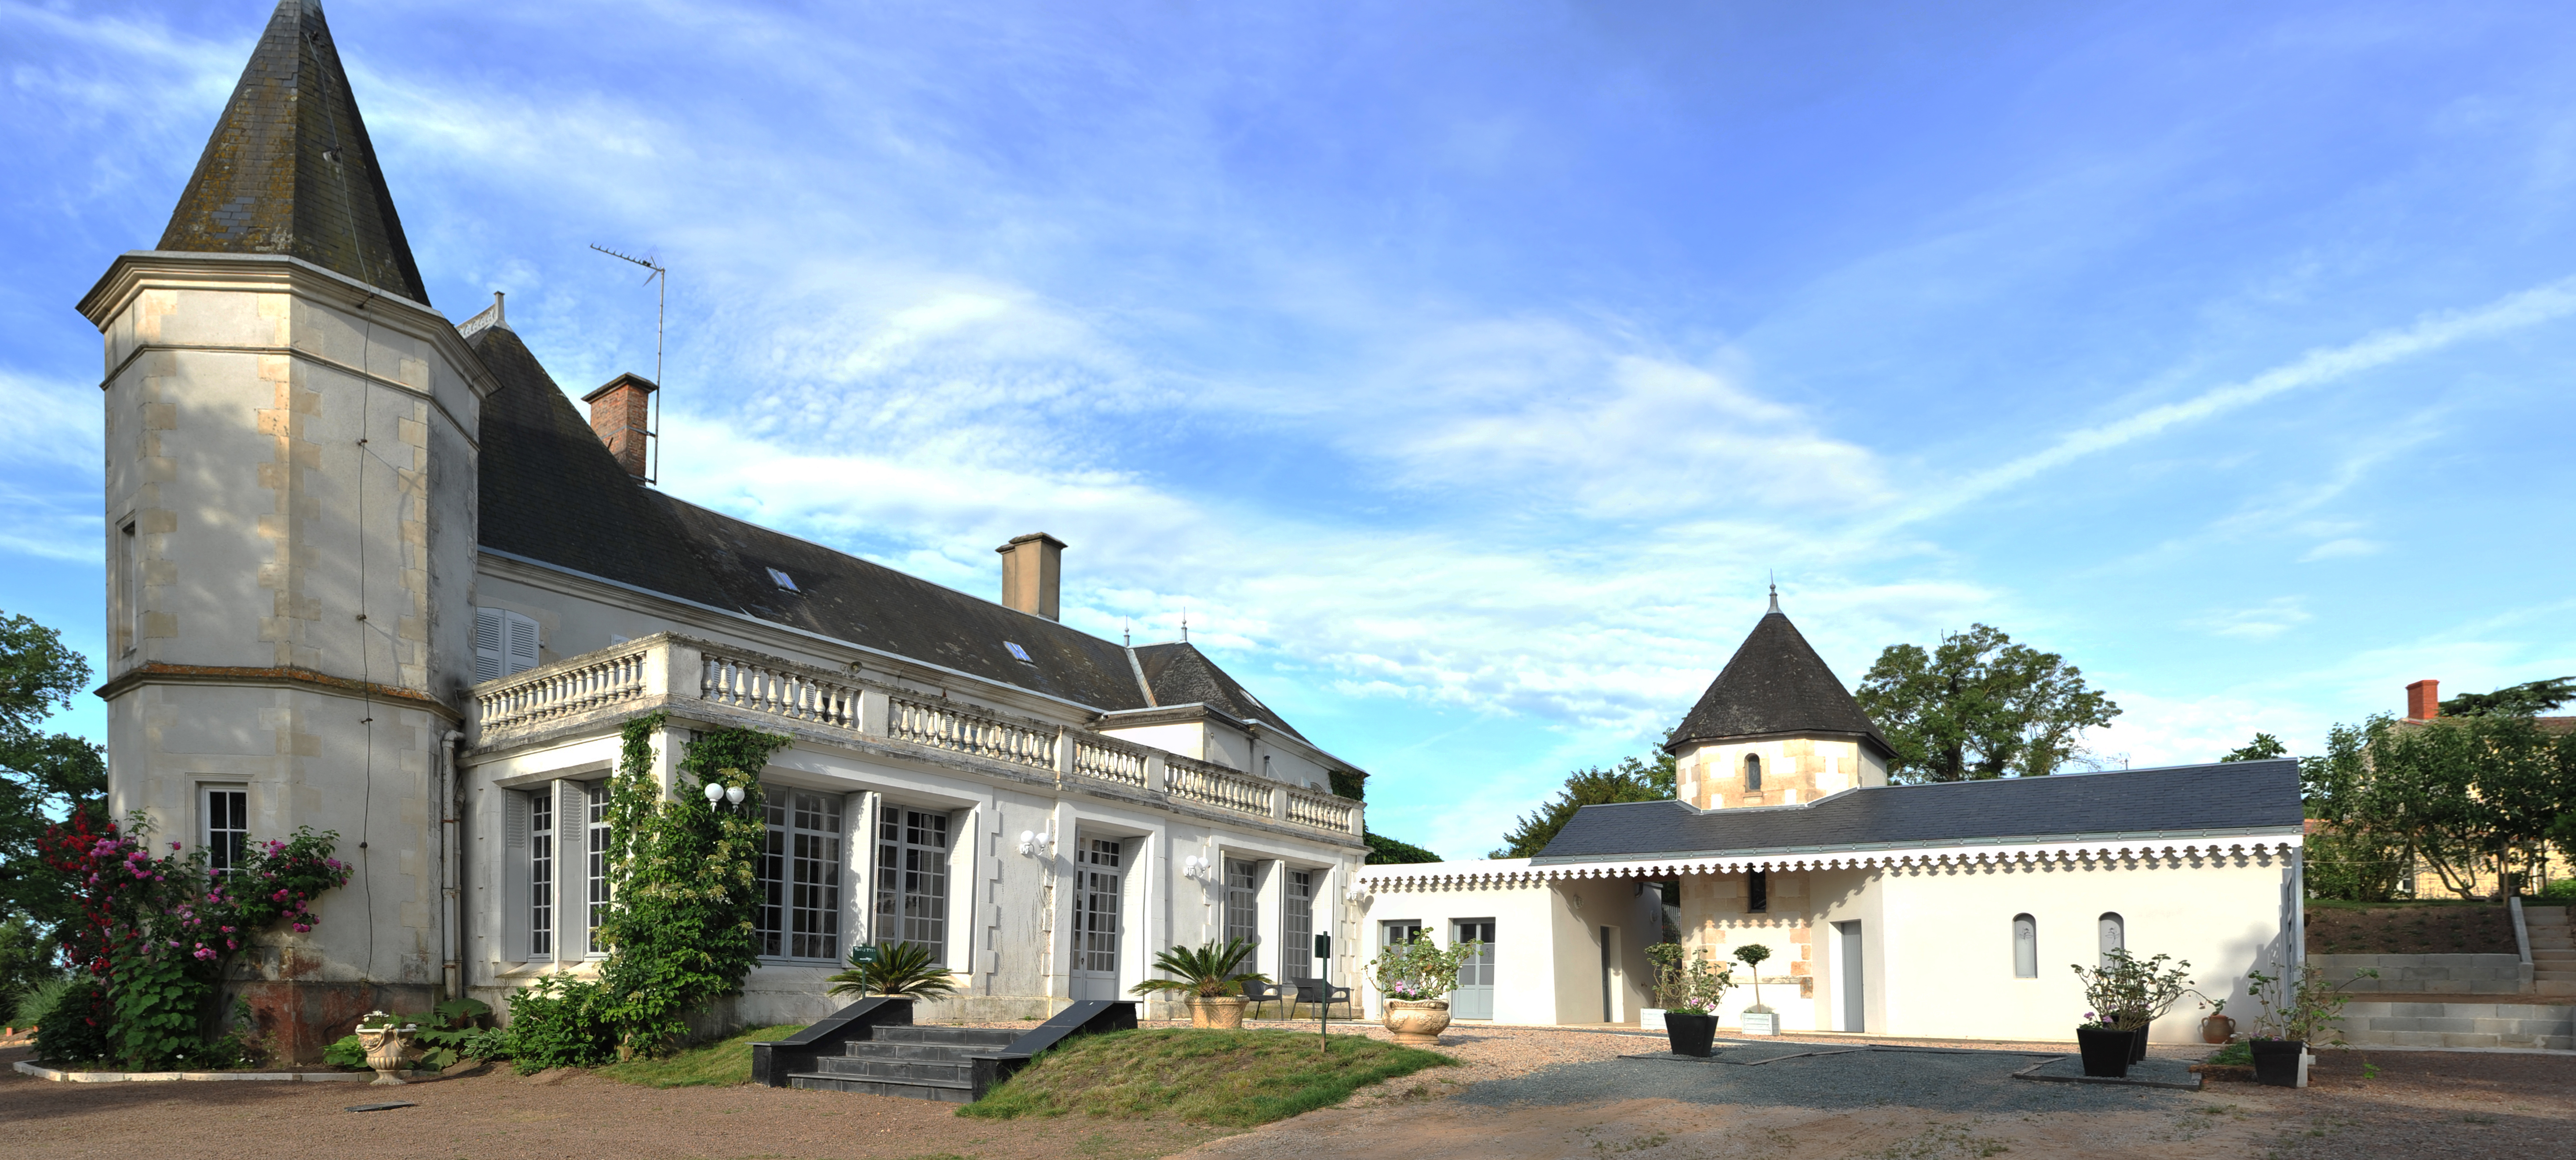 Château _1_.jpg